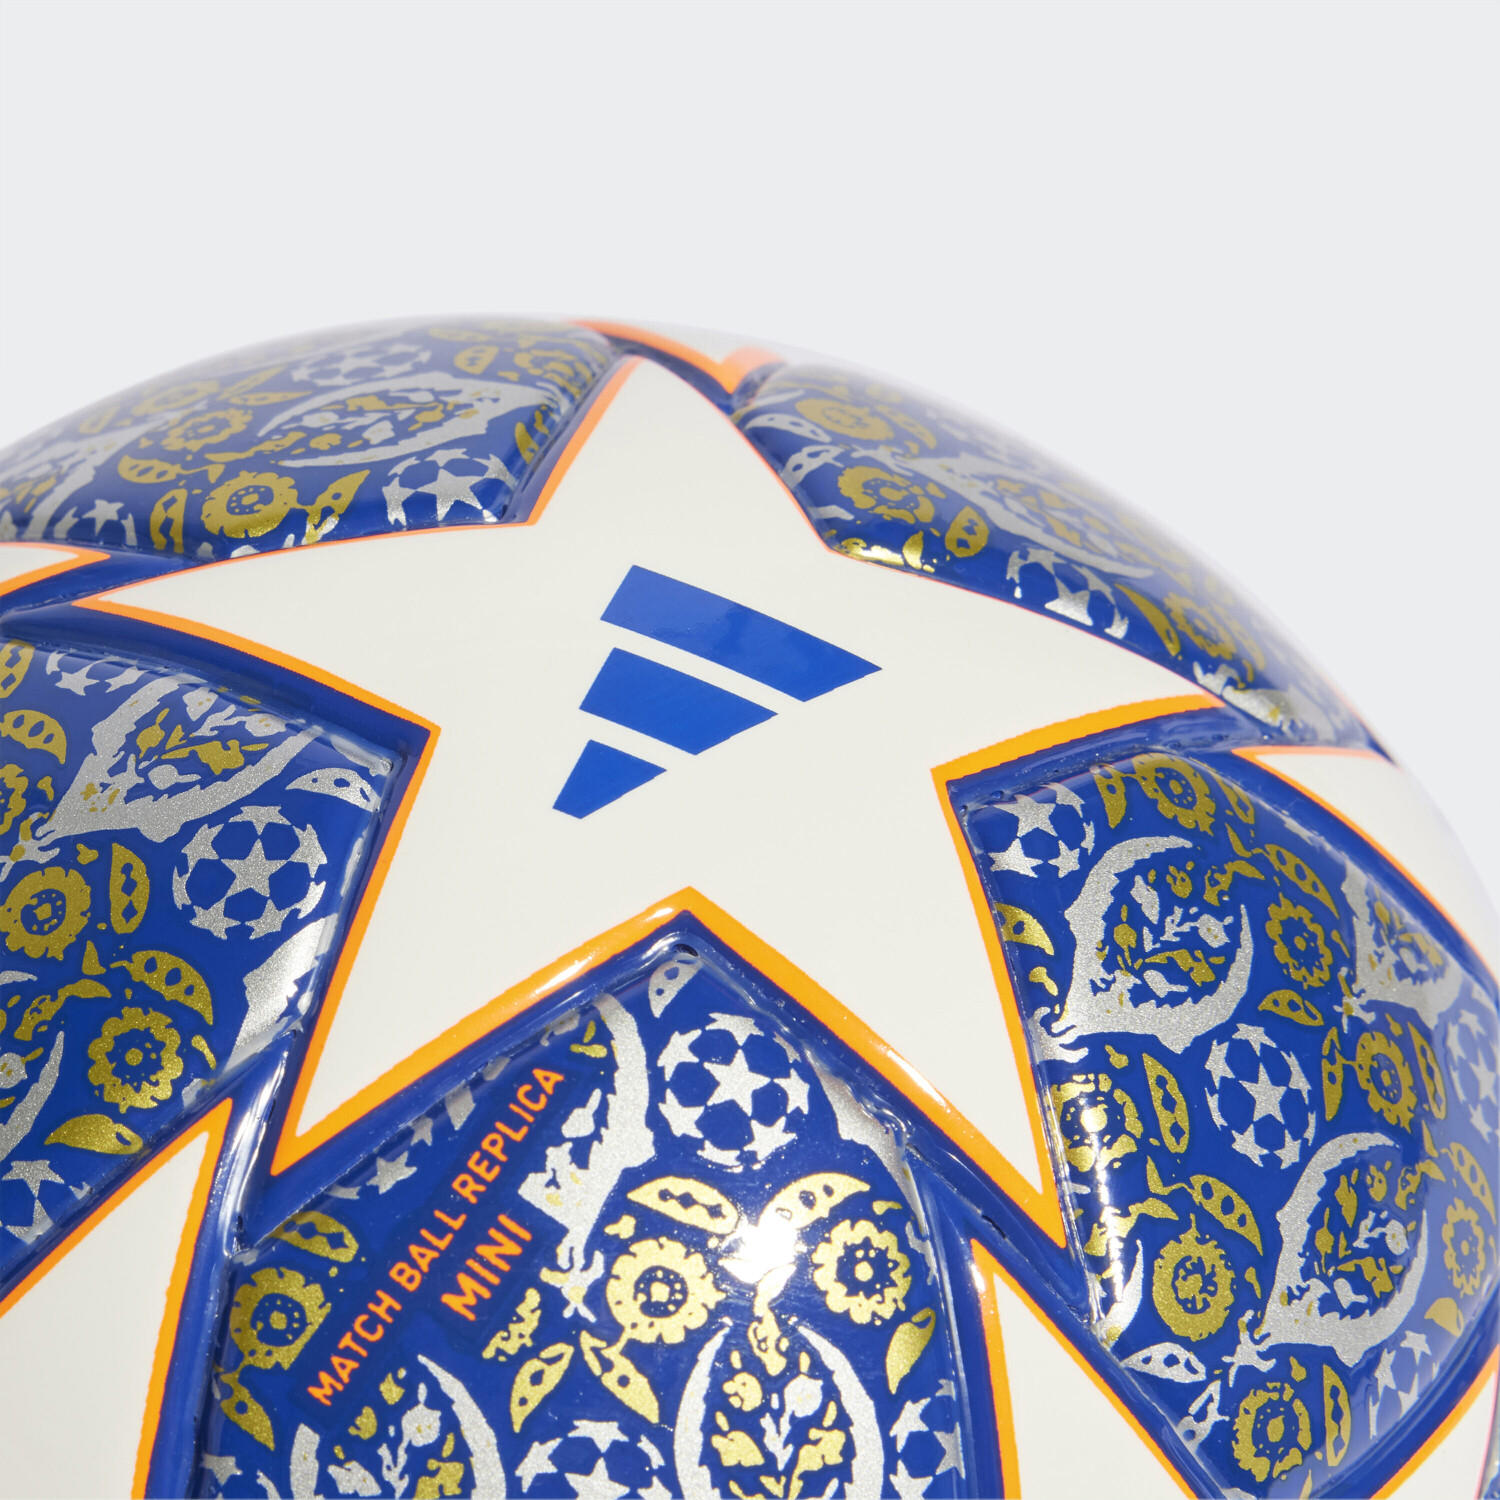 Adidas UEFA Champions League Finale 2023 Miniball